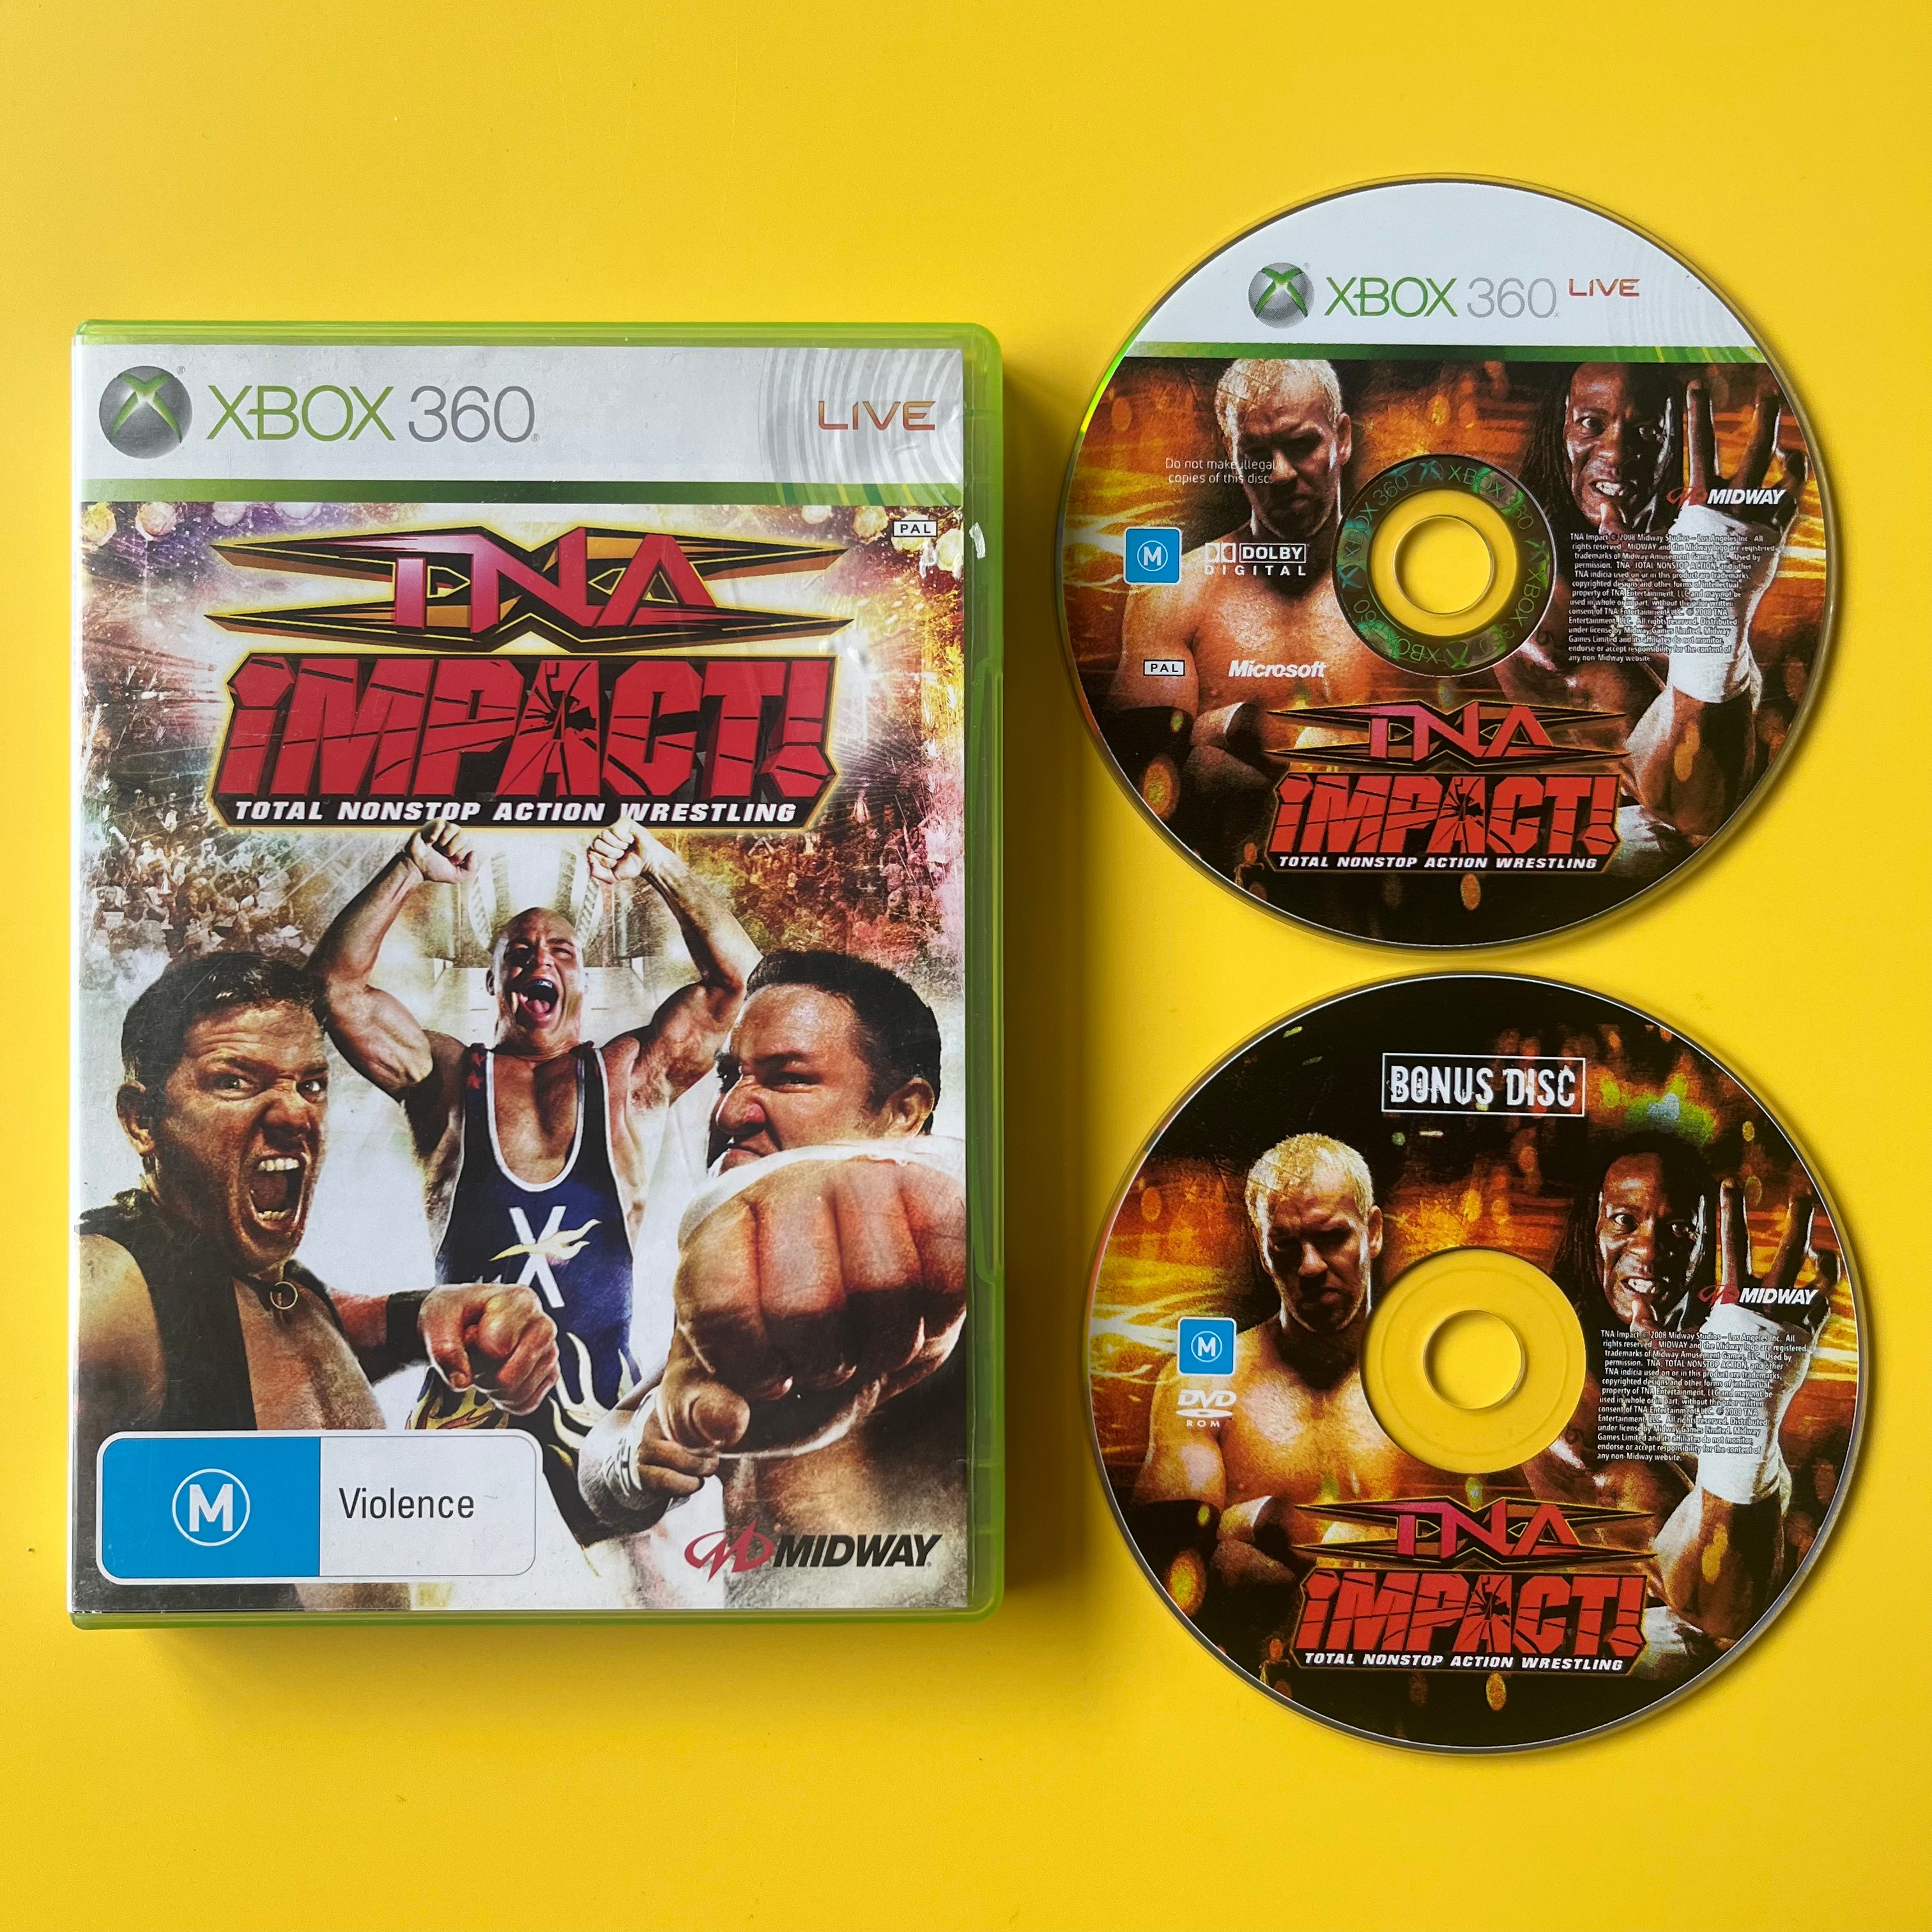 Xbox 360 - TNA Impact! - Total Nonstop Action Wrestling